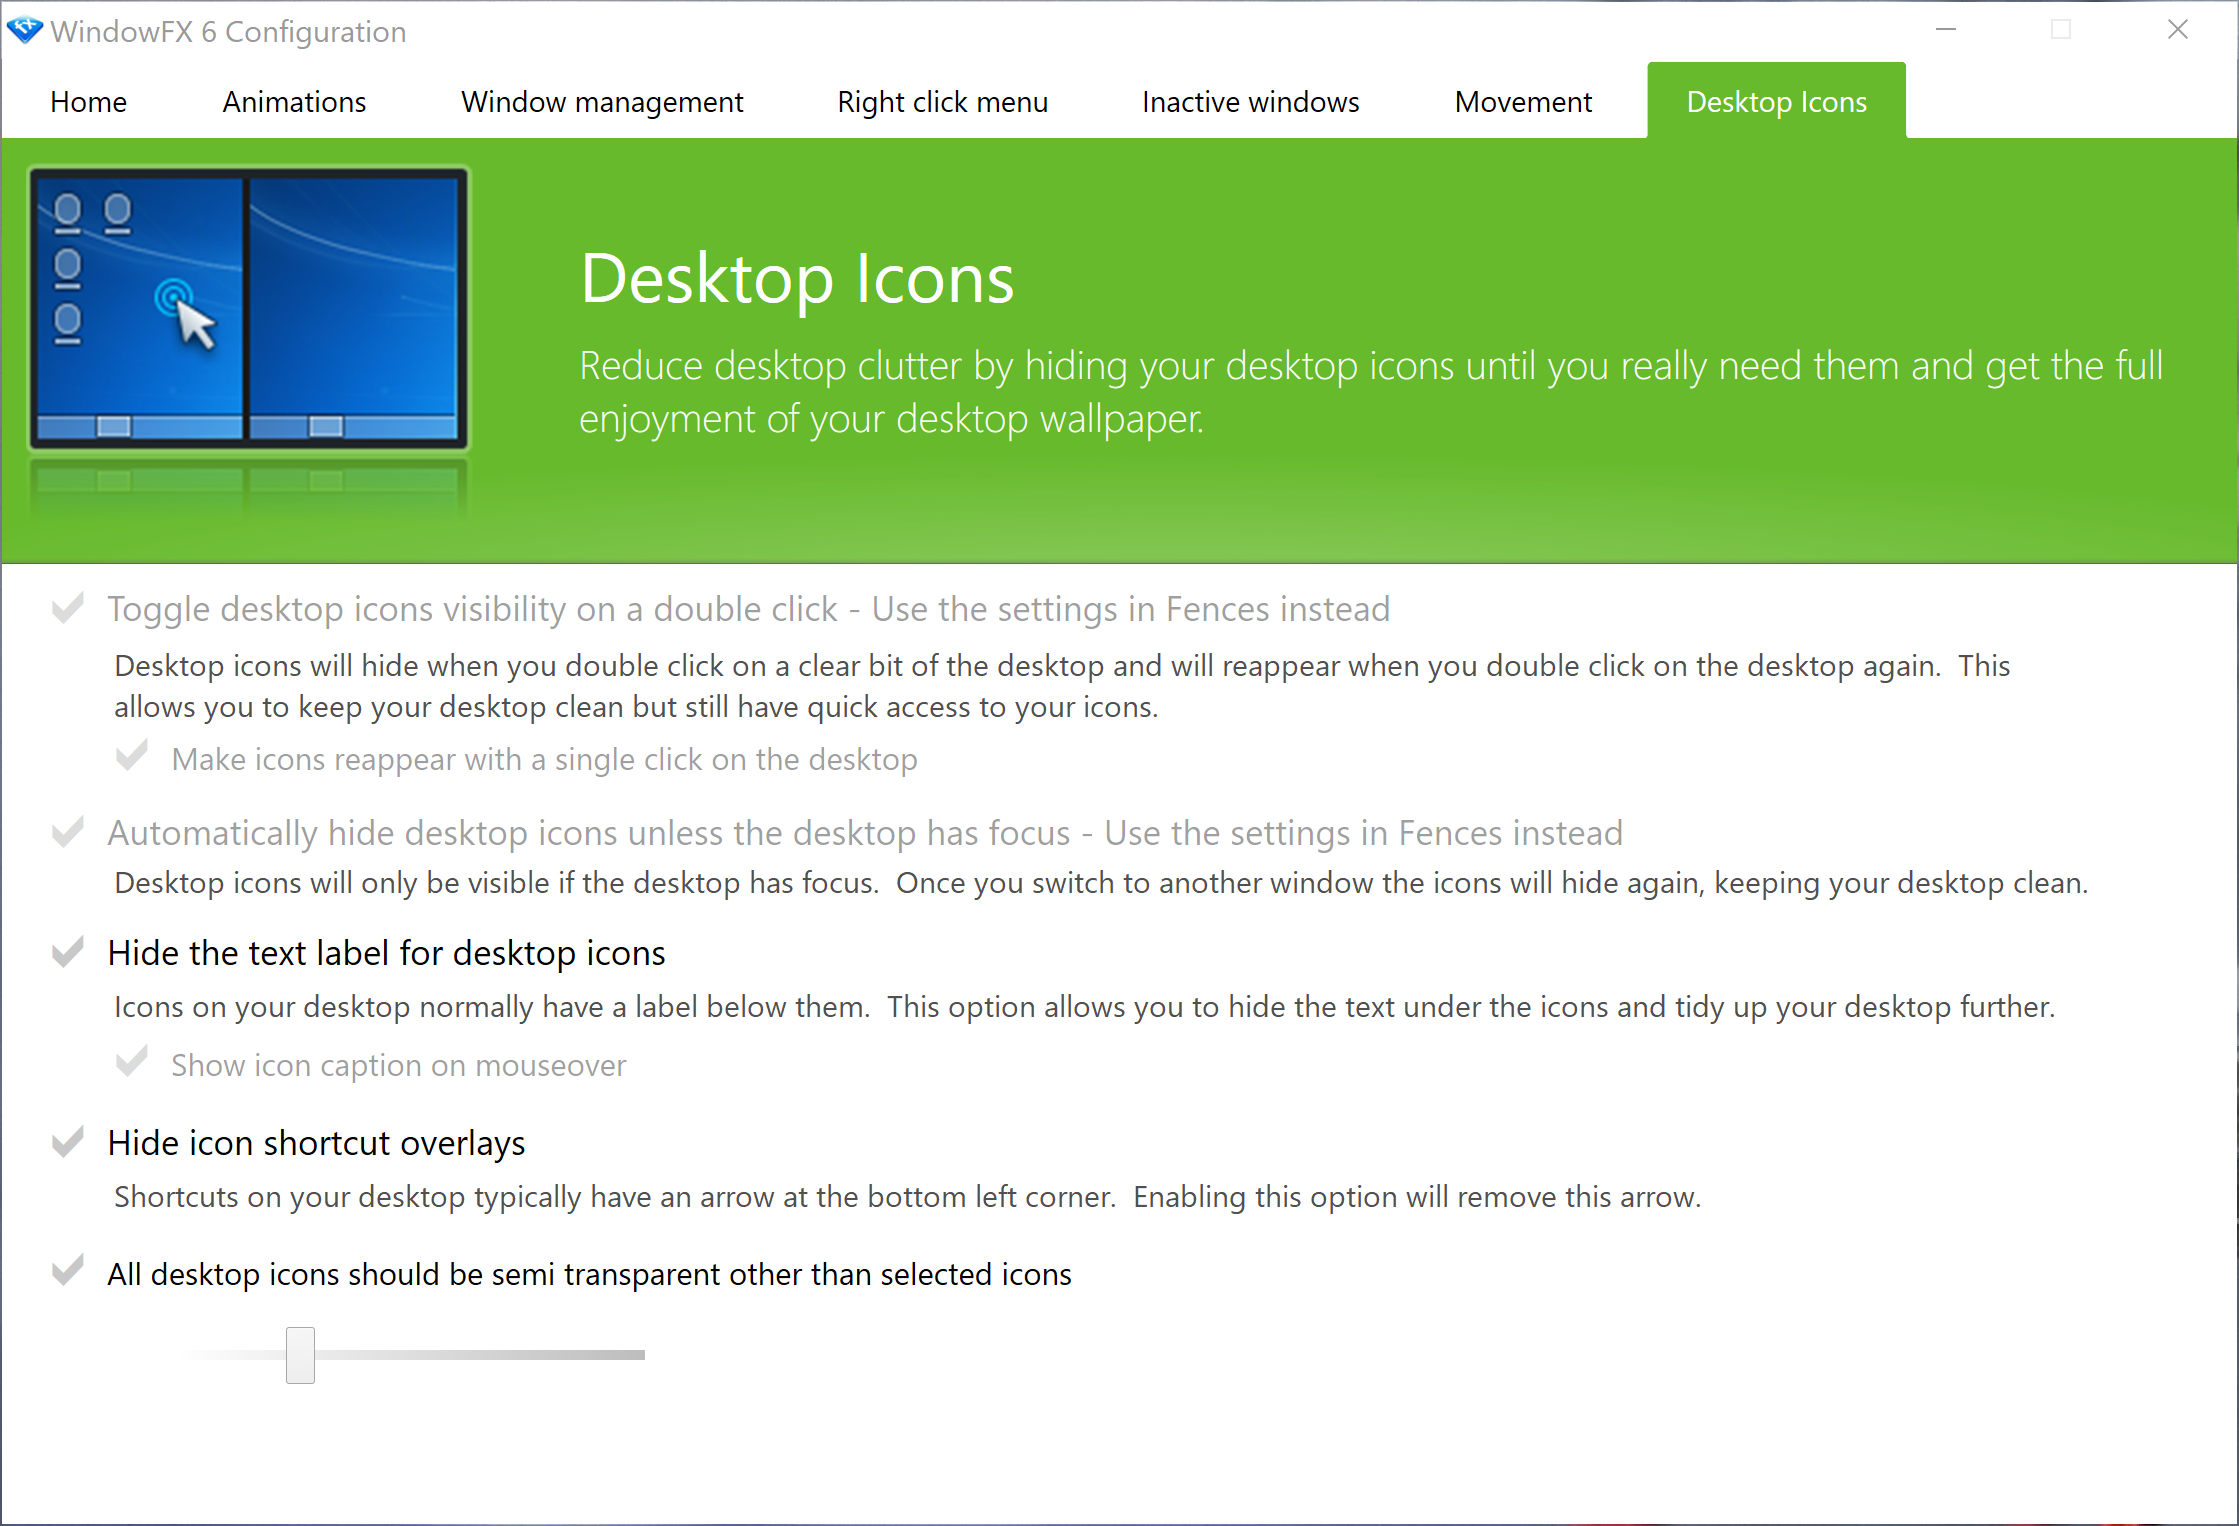 File:Windowfx desktopicons.png